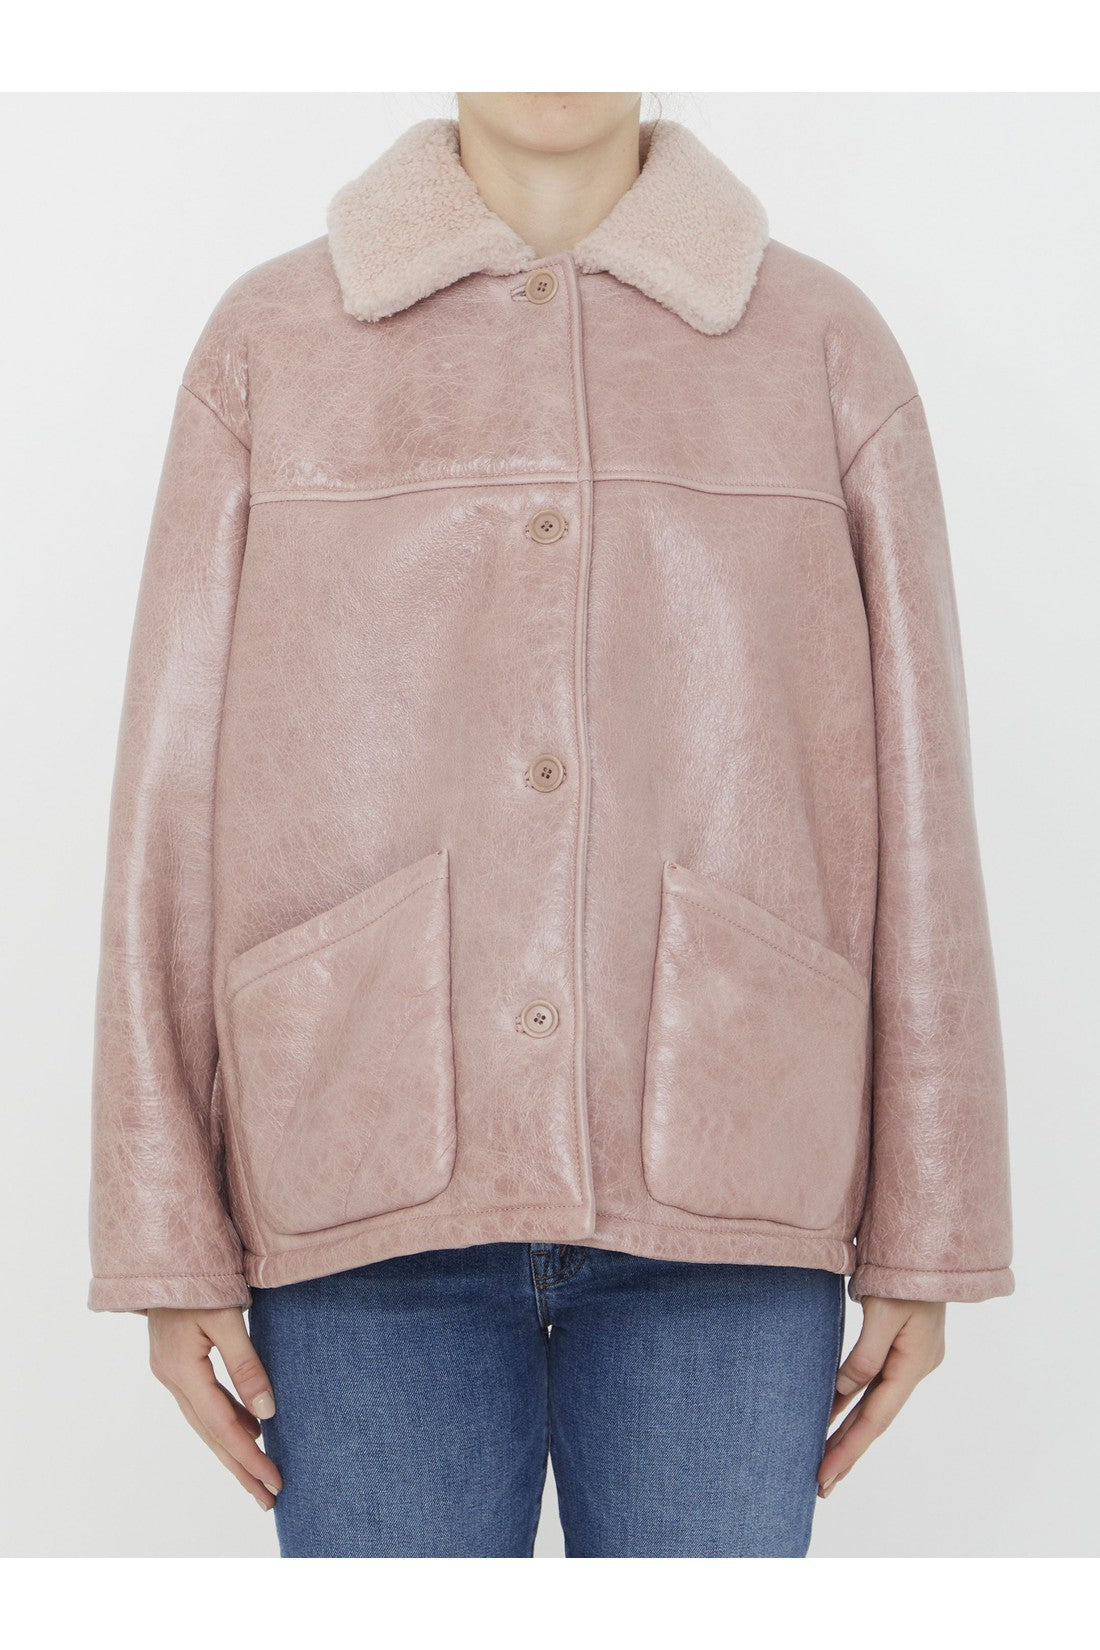 Pink leather jacket